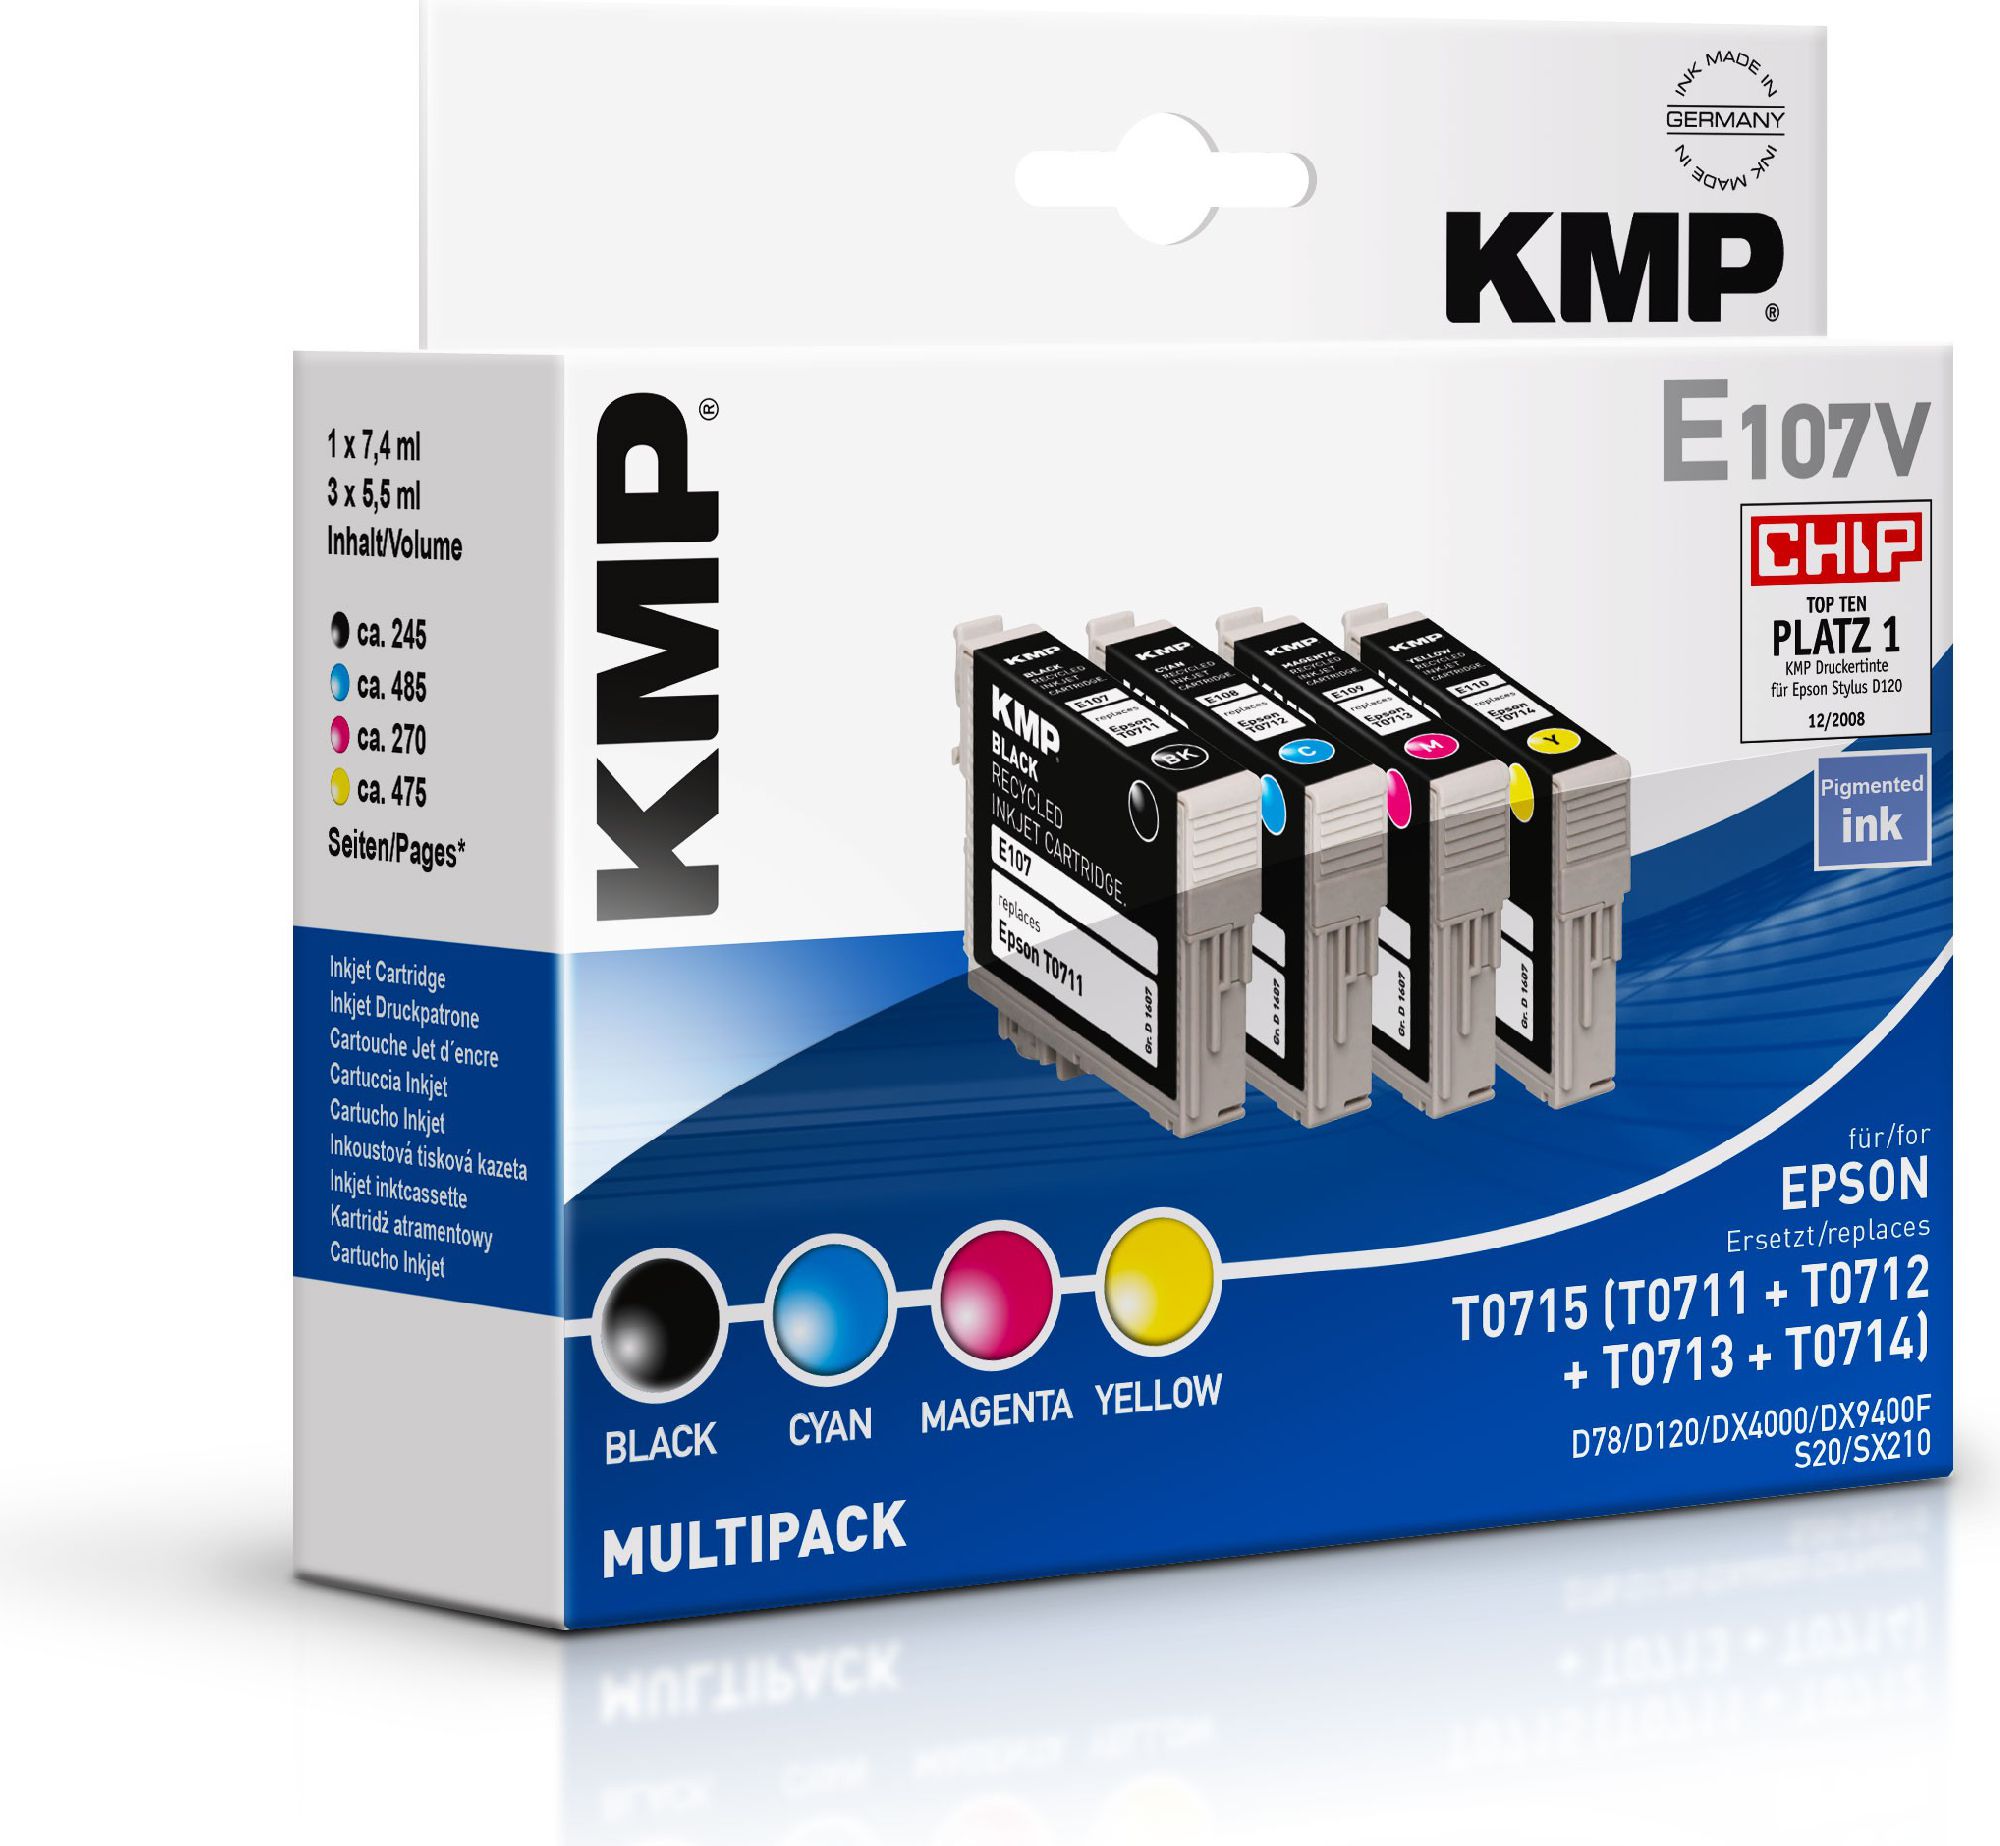 KMP E107V Multipack BK/C/M/Y compatible with Epson T 071